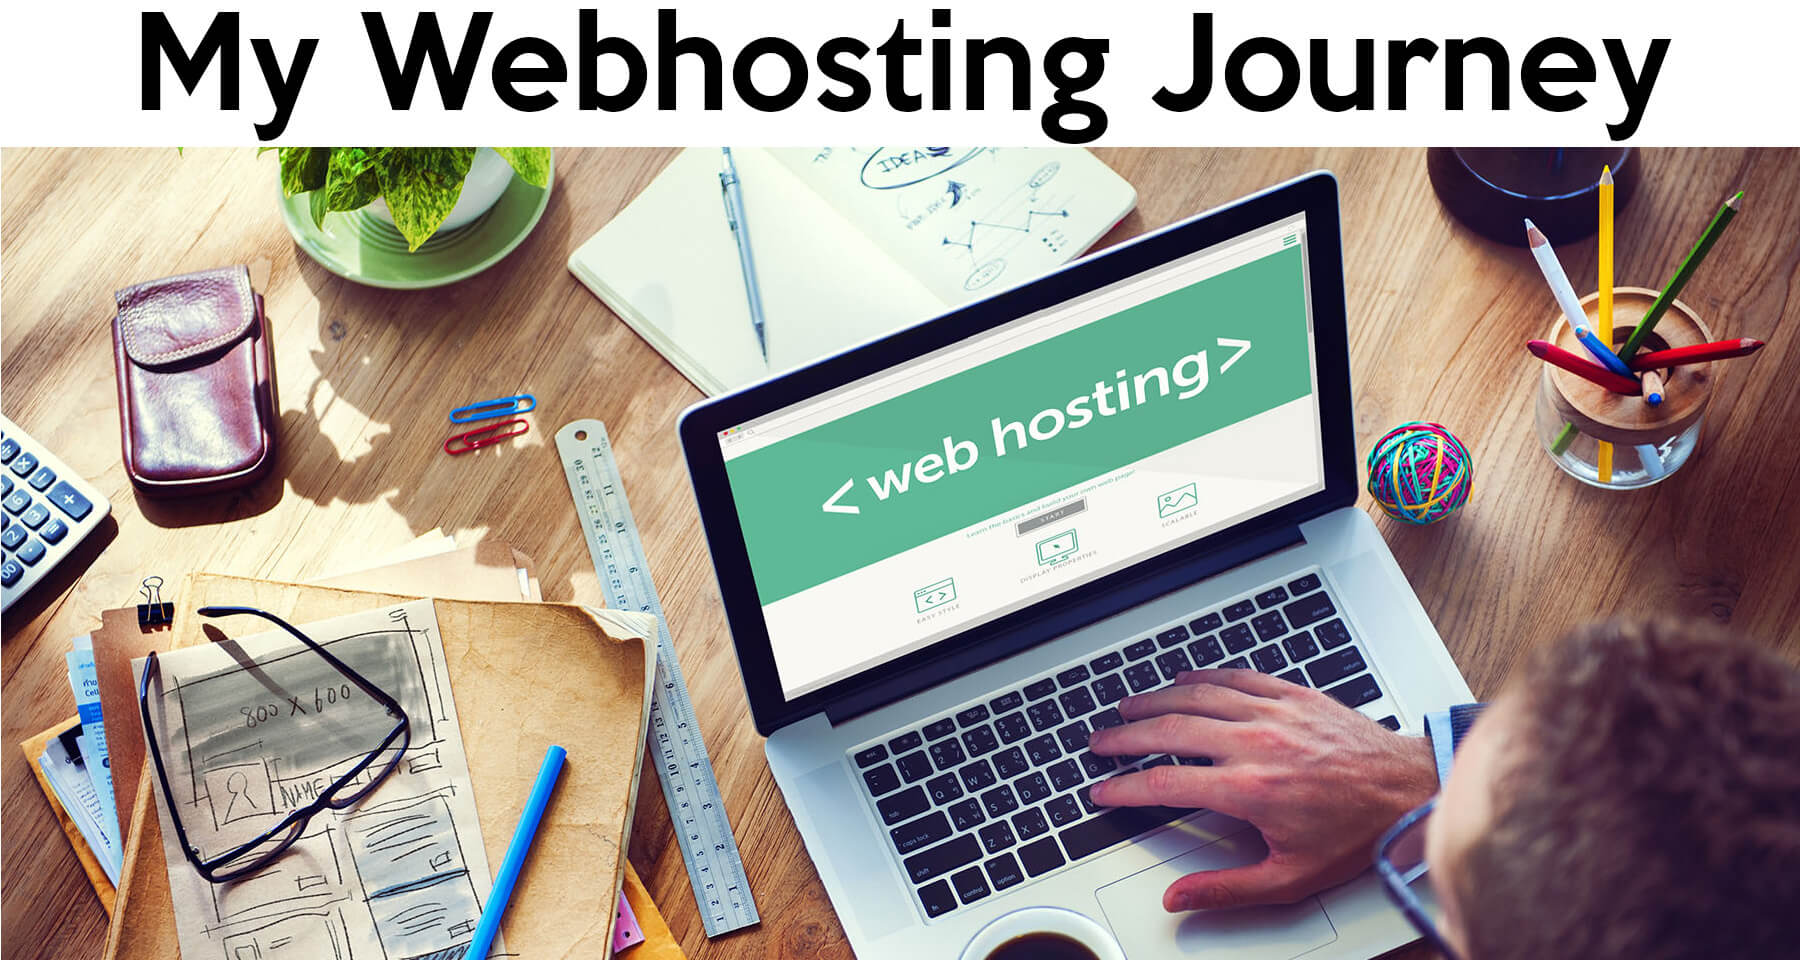 Webhosting Story